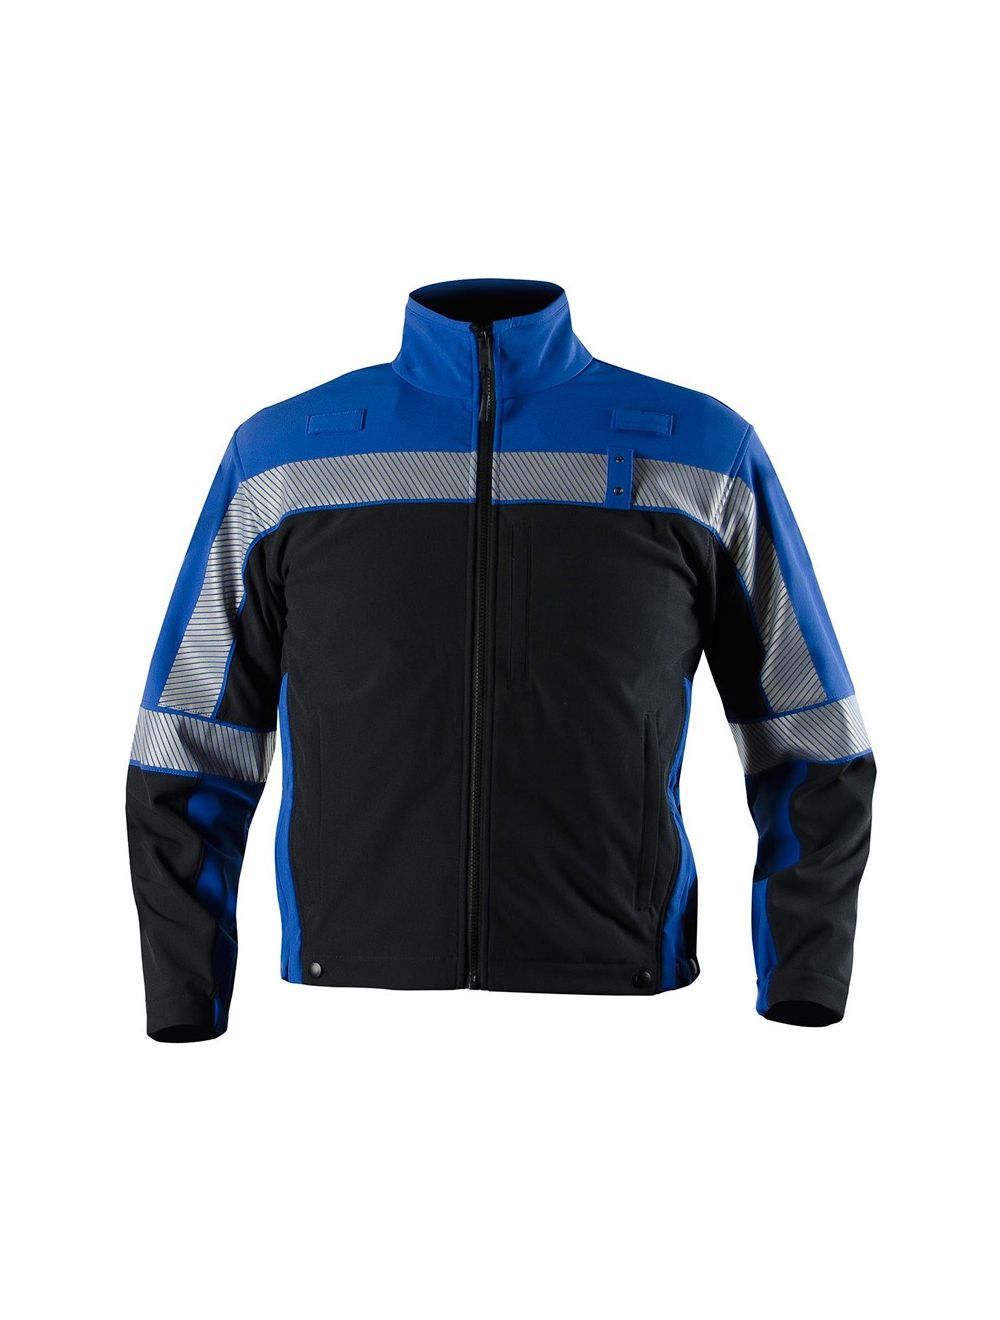 NEW Blauer Colorblock Softshell Fleece Reflective Hi-Vis Jacket ALL SIZES 4670 